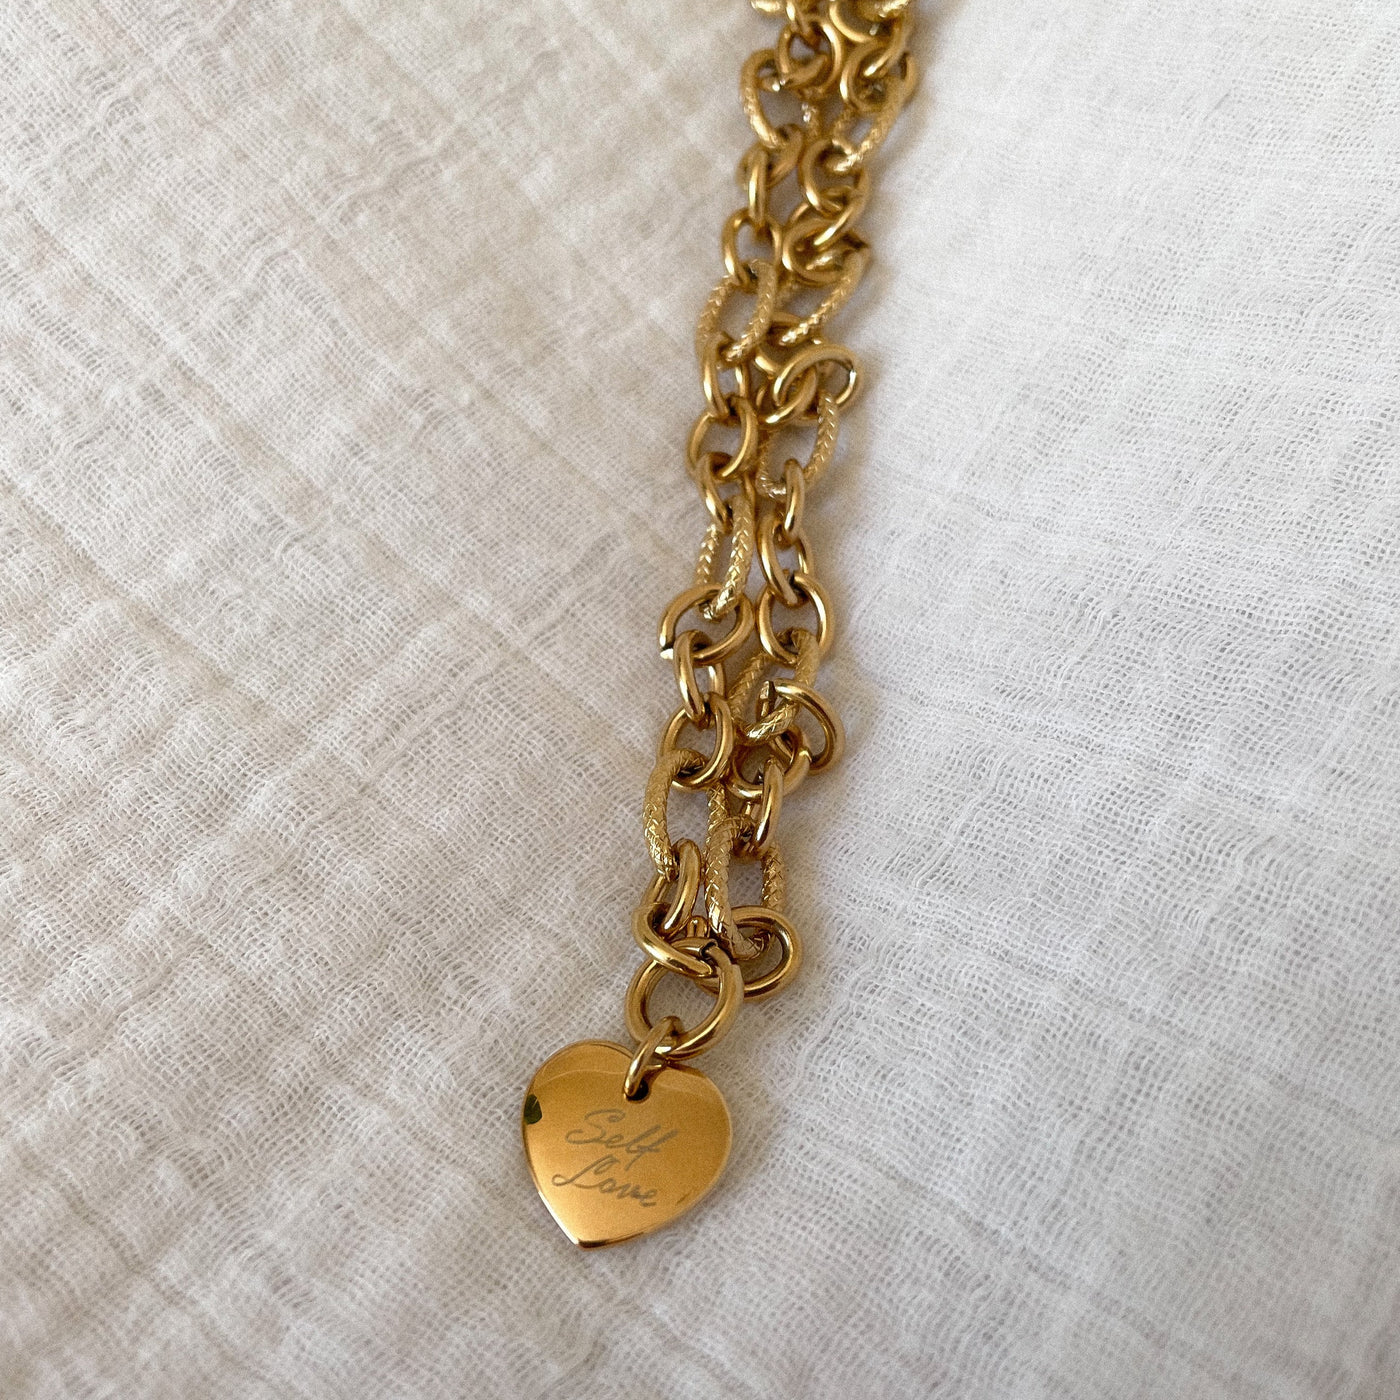 Self Love Necklace - Lilou Paris US